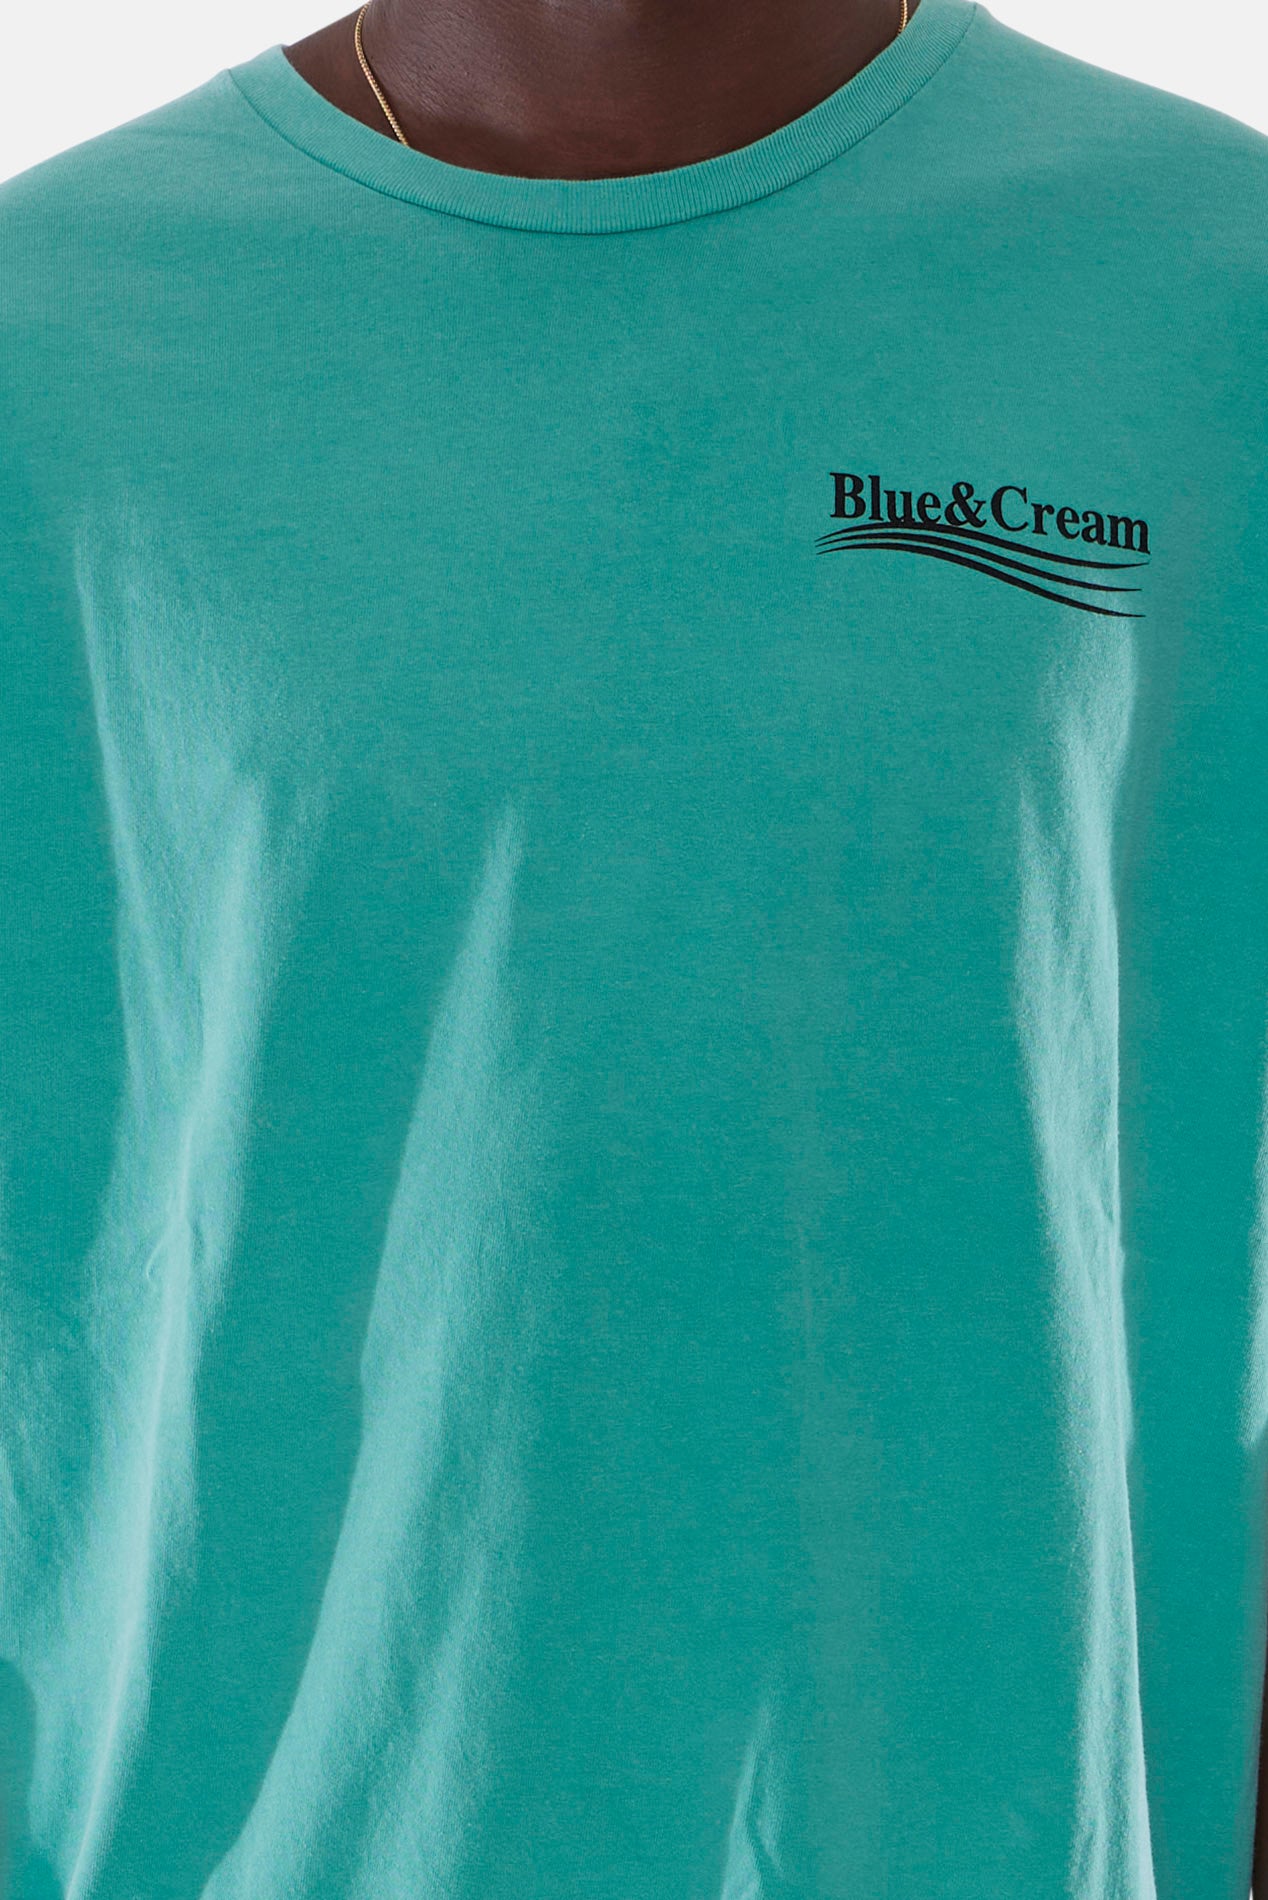 Blue&Cream Basic Burnout Tee - Light Grey